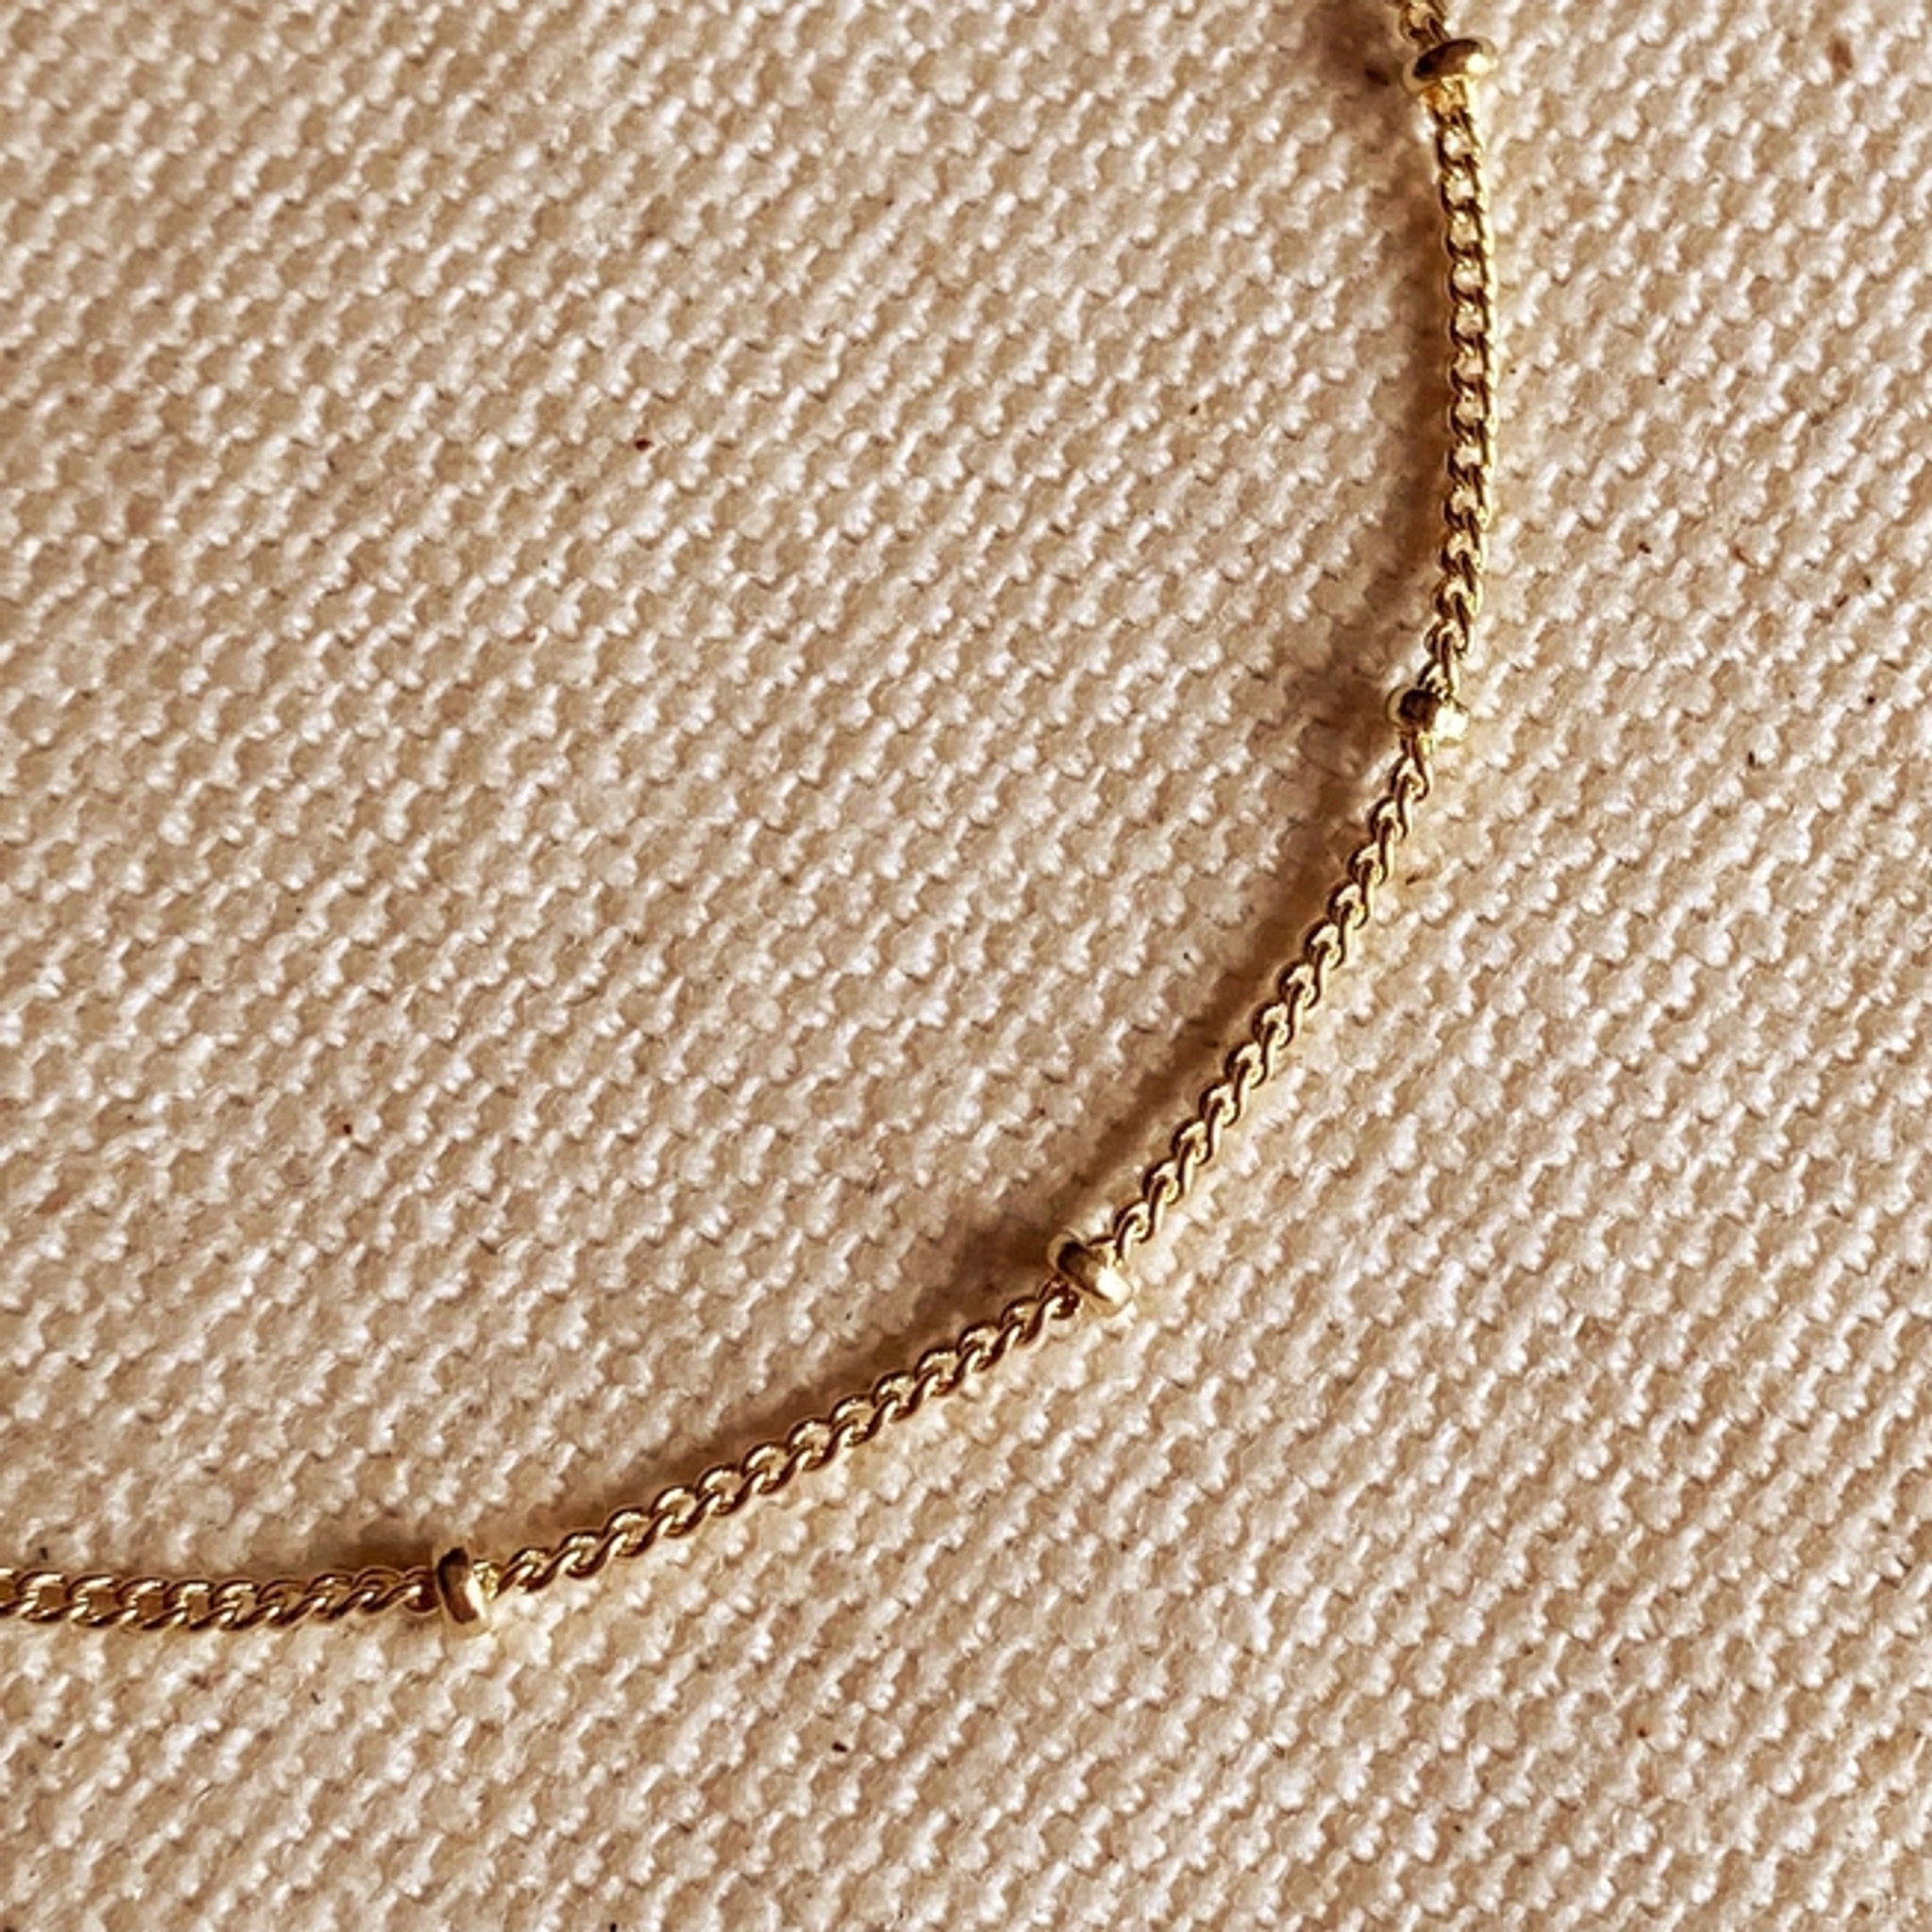 Gold Filled Satellite Bracelet